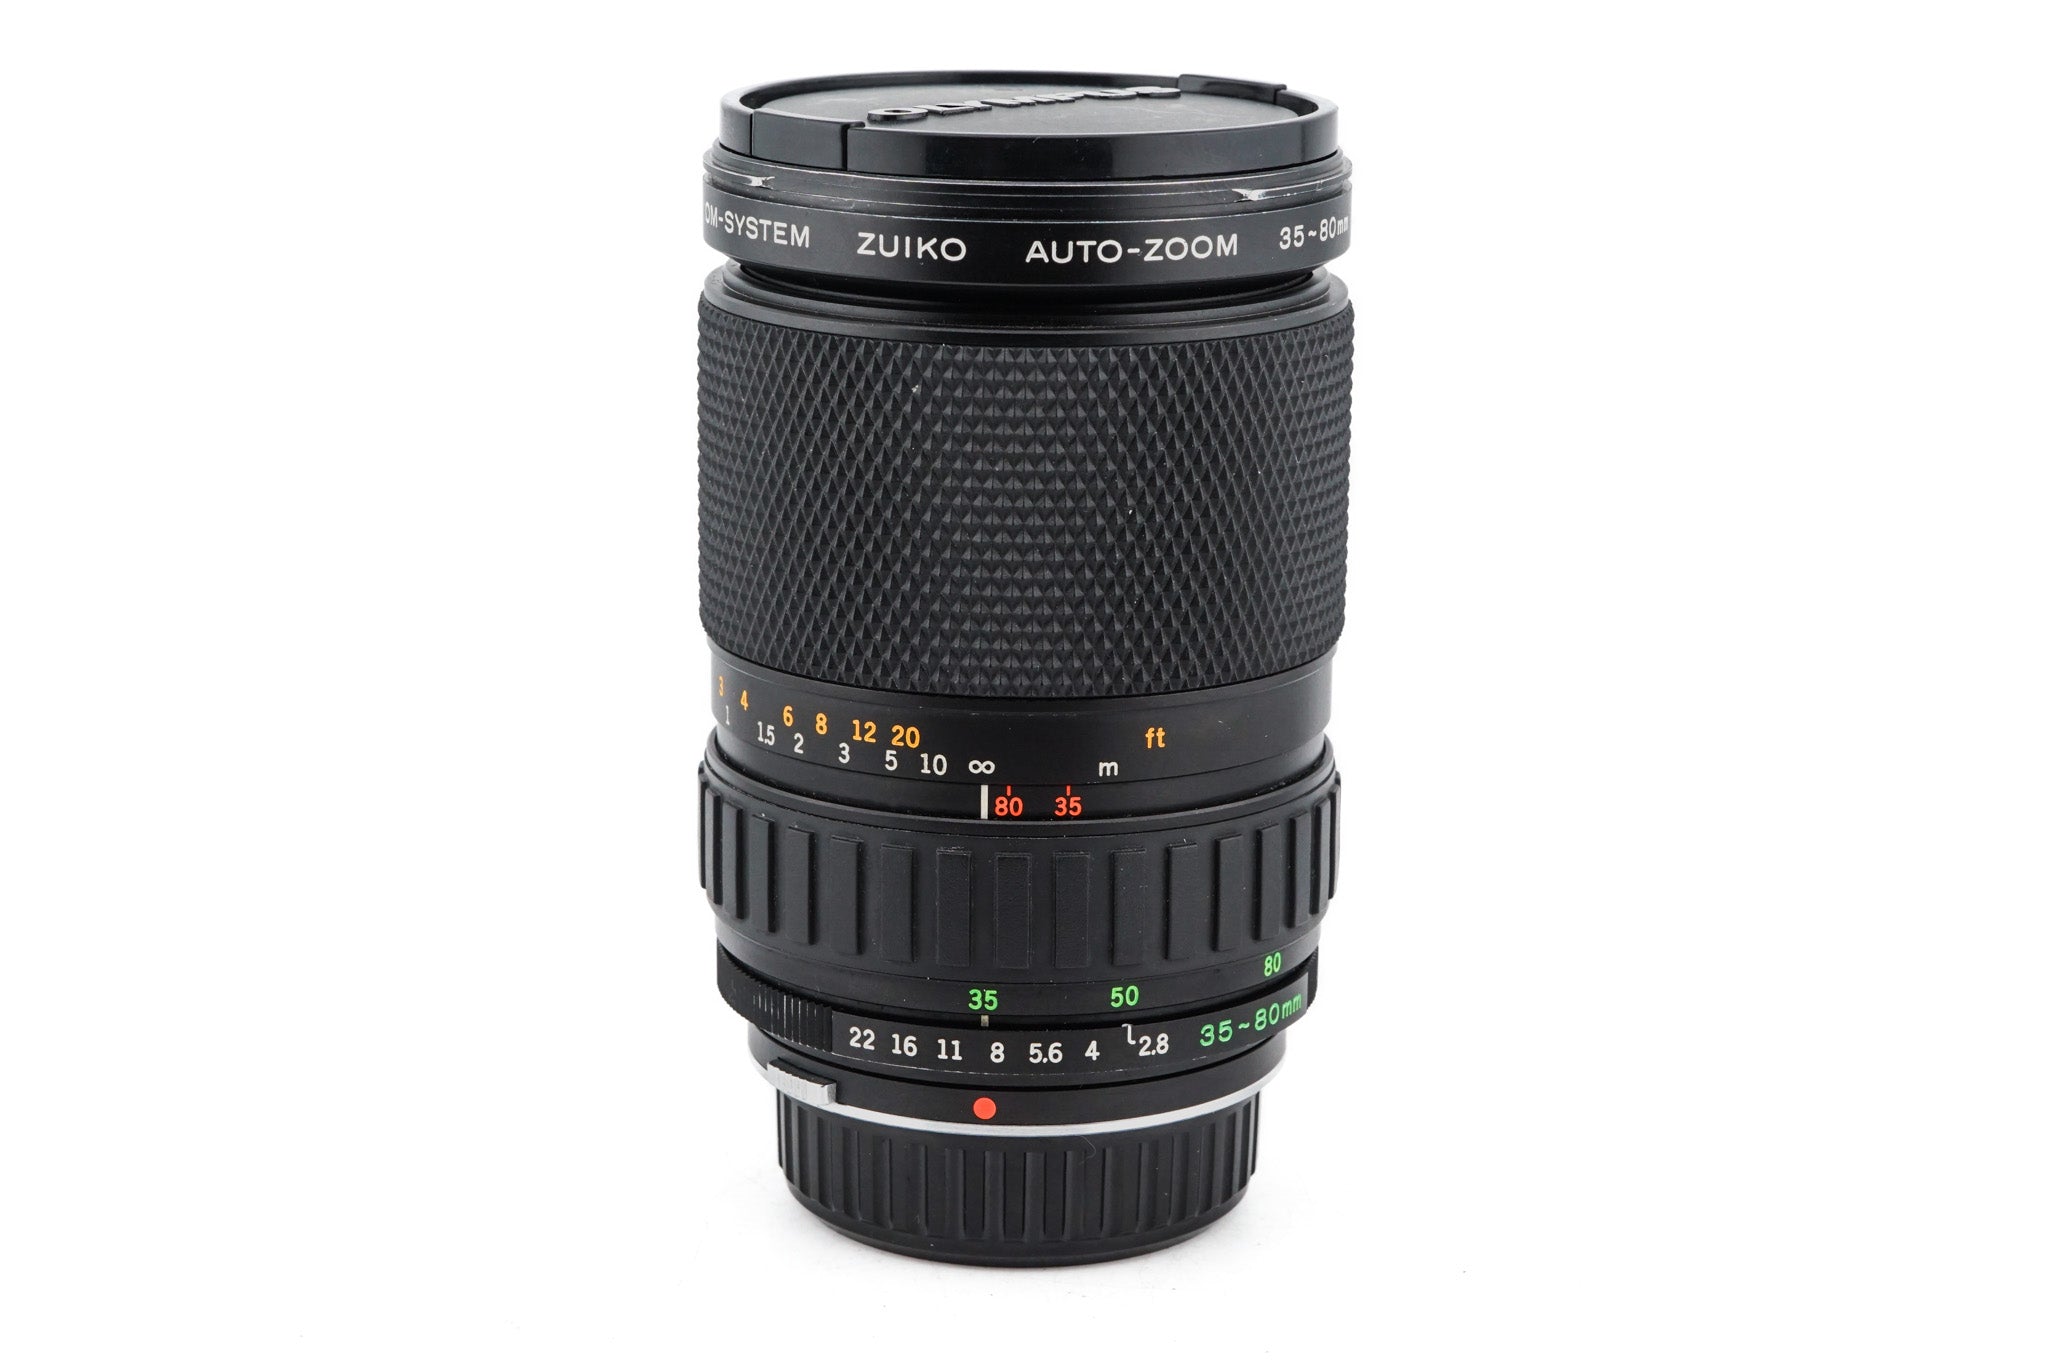 Olympus 35-80mm f2.8 Zuiko Auto-Zoom - Lens